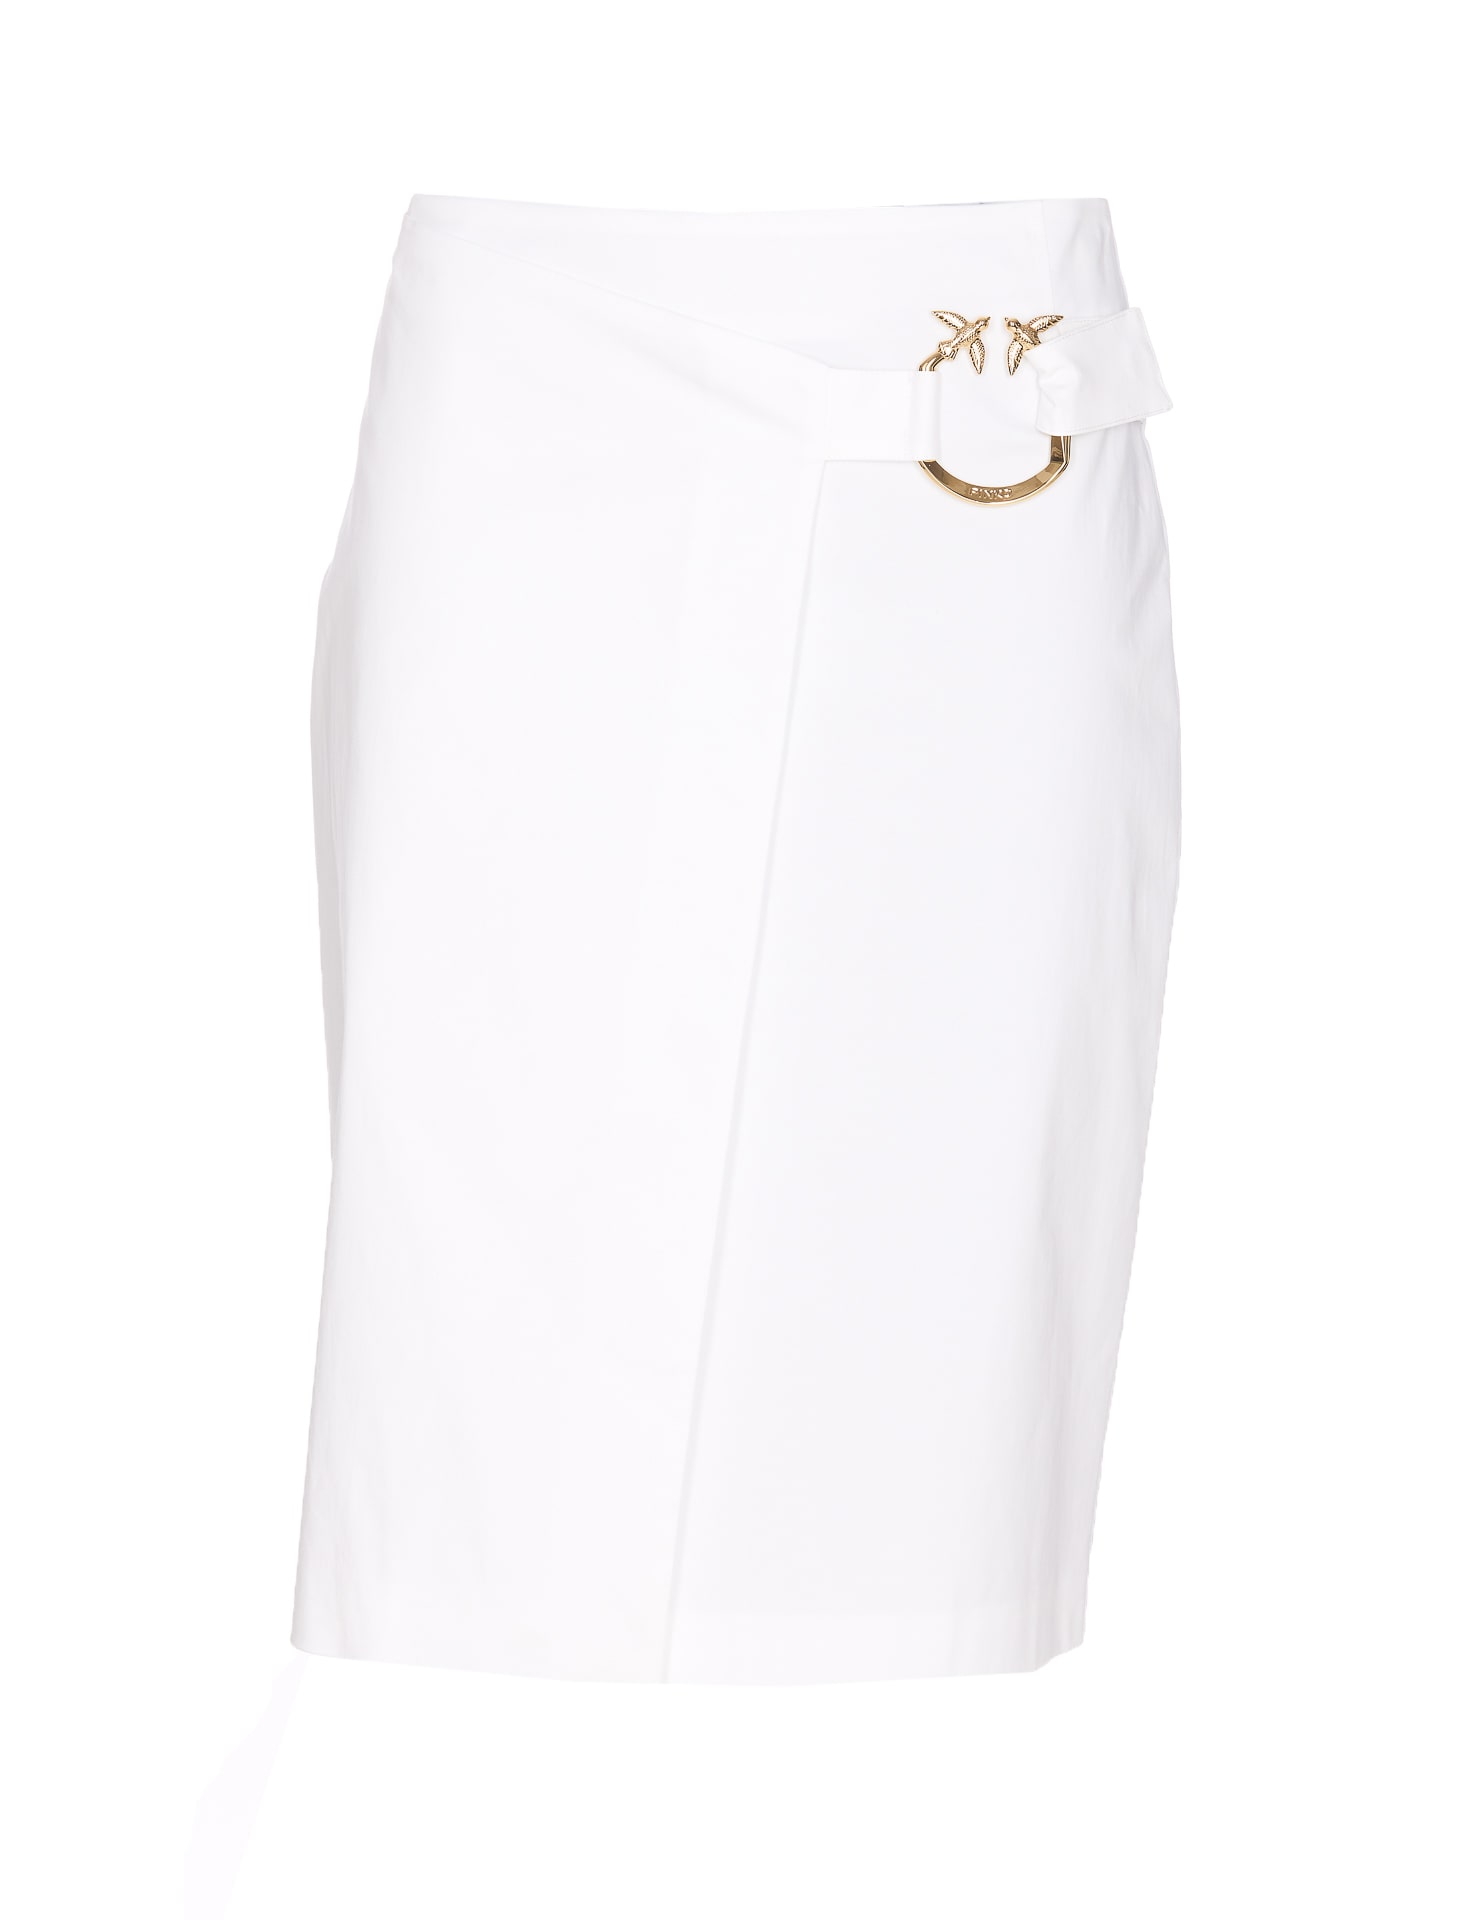 Piercing Buckle Longuette Skirt